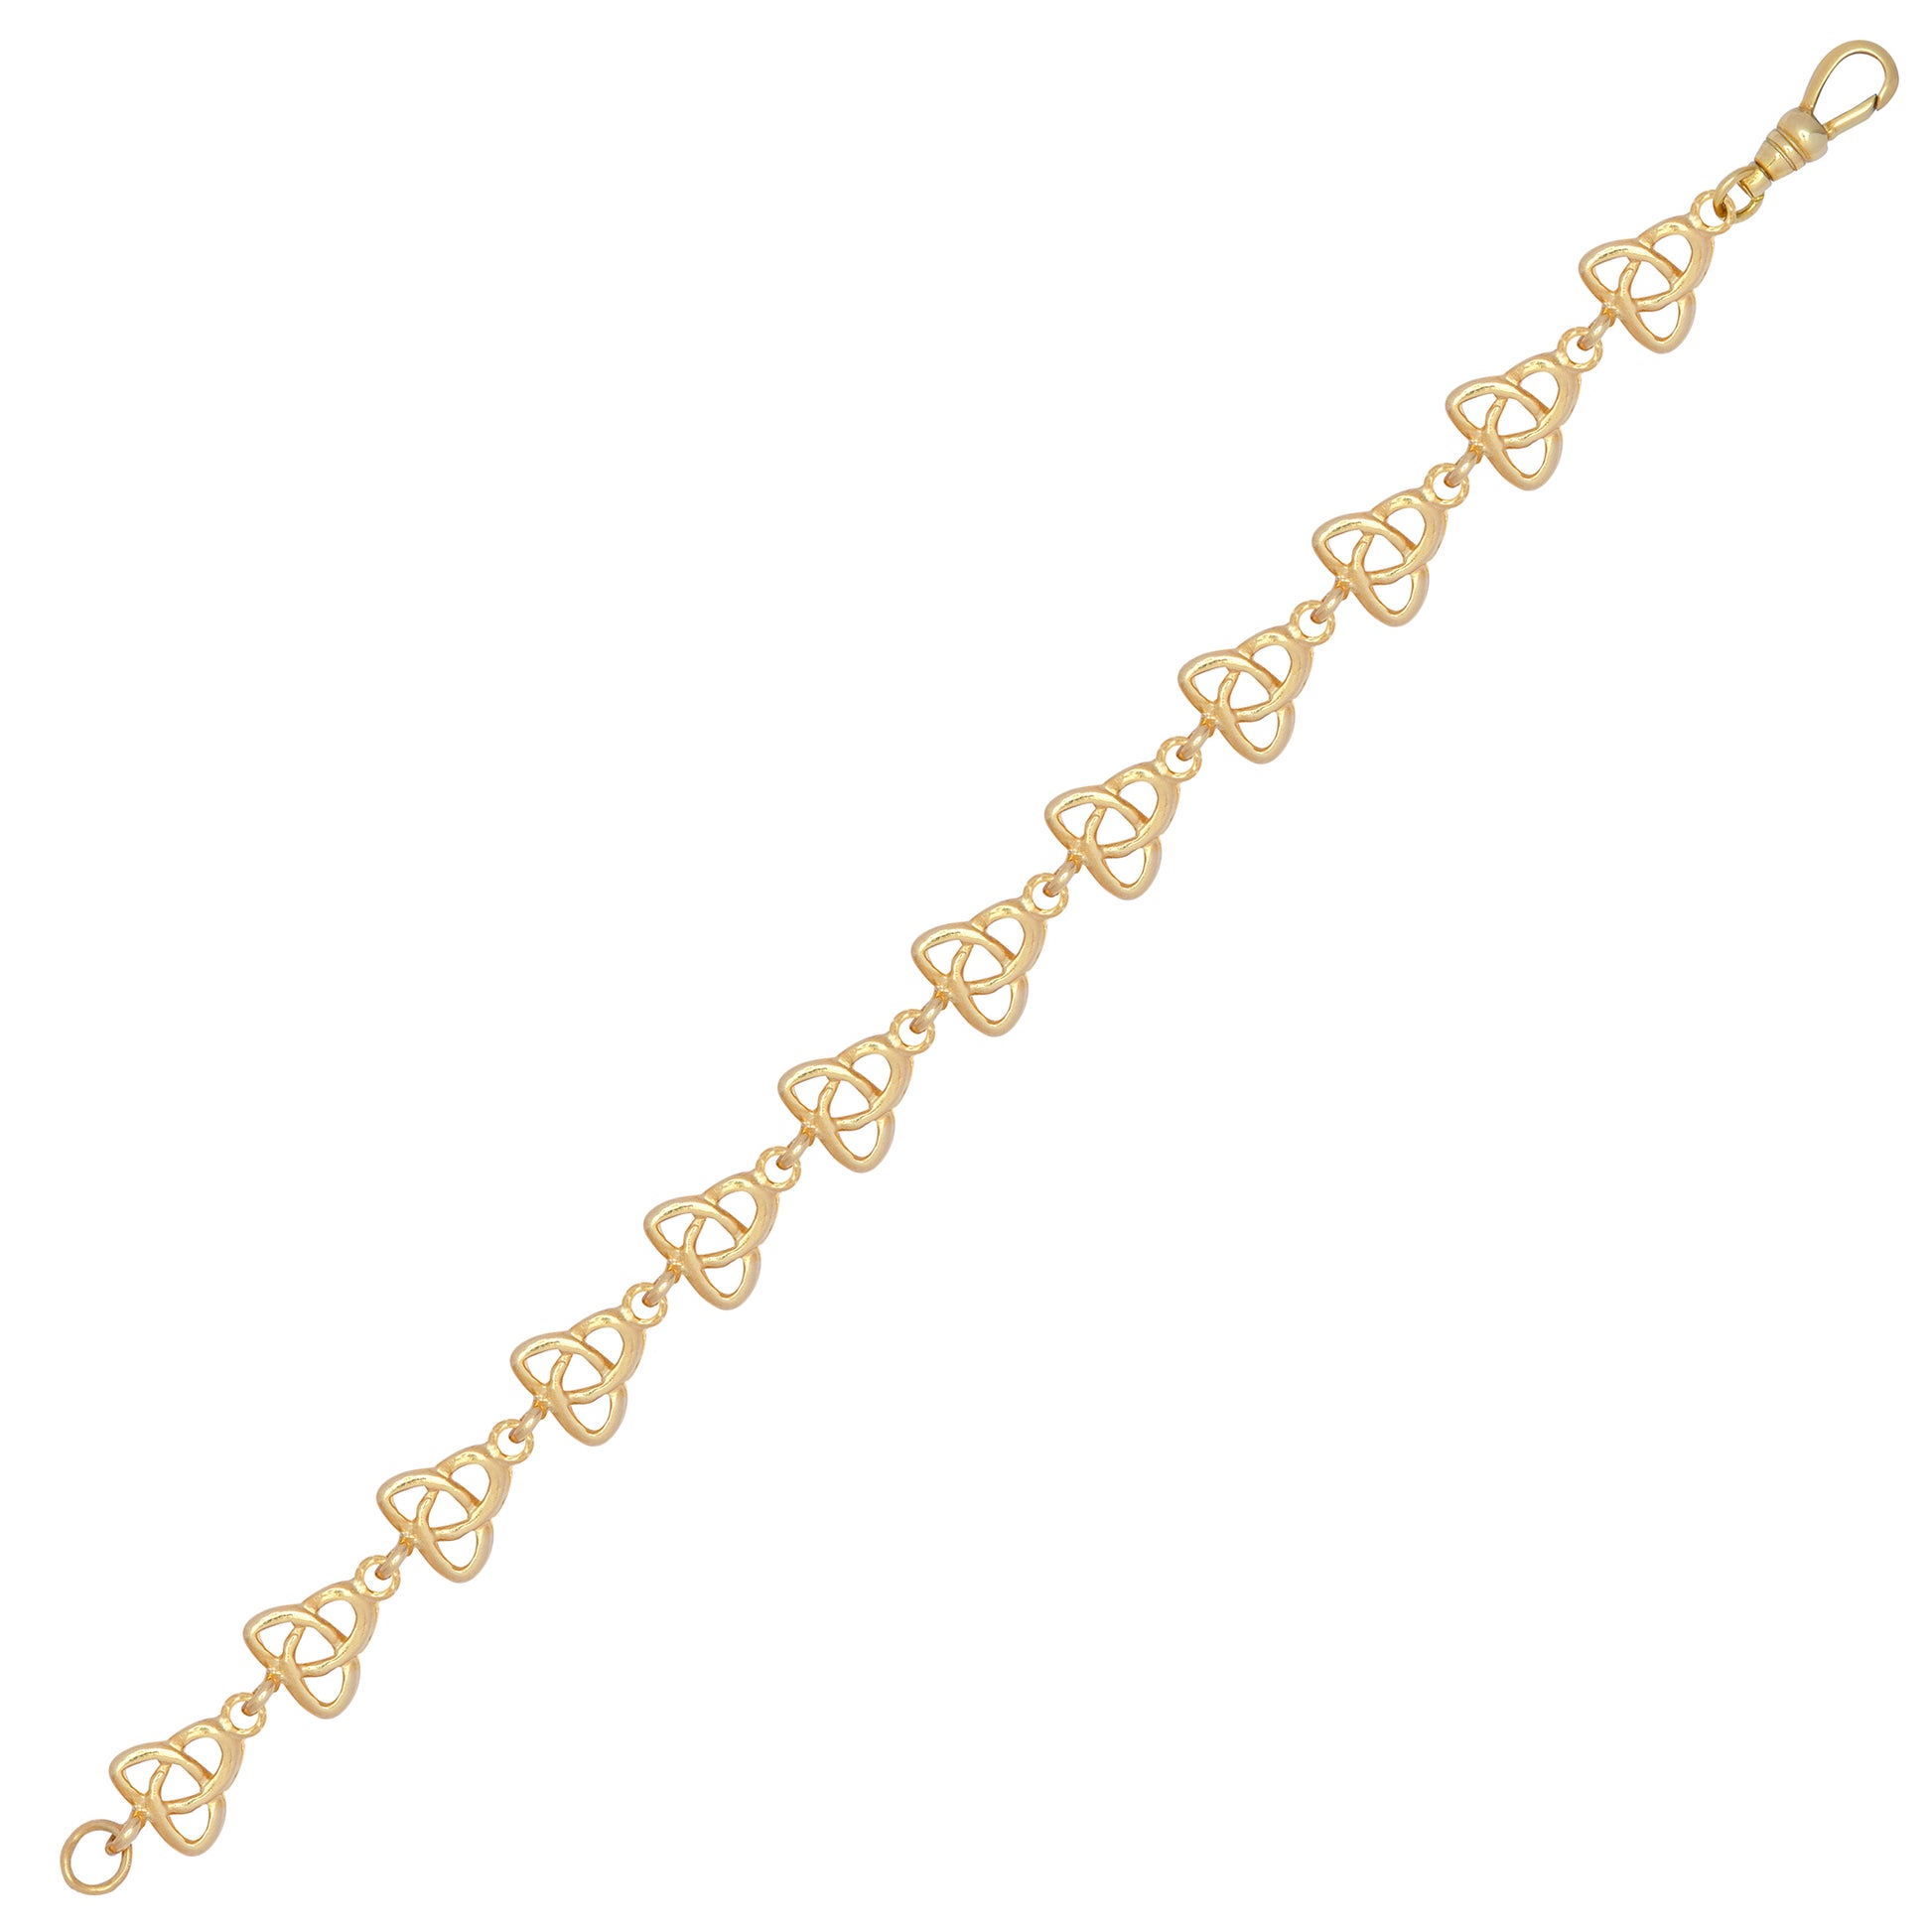 9ct Gold  Trilogy Celtic Knot 10mm Chain Link Bracelet 7.5inch - JBB395